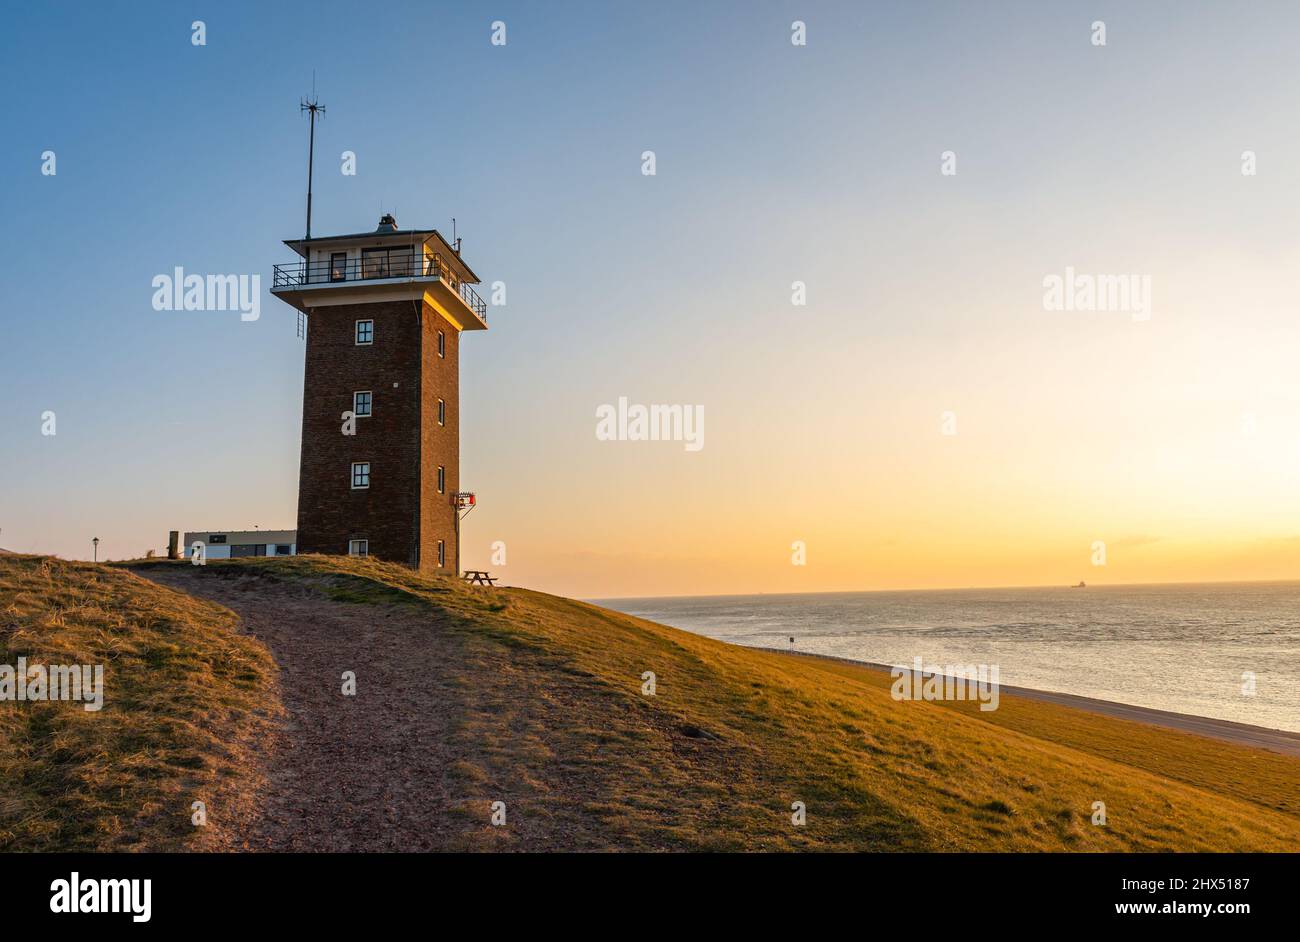 Historical coast guard tower in dutch village Huisduinen by sunset Stock Photo